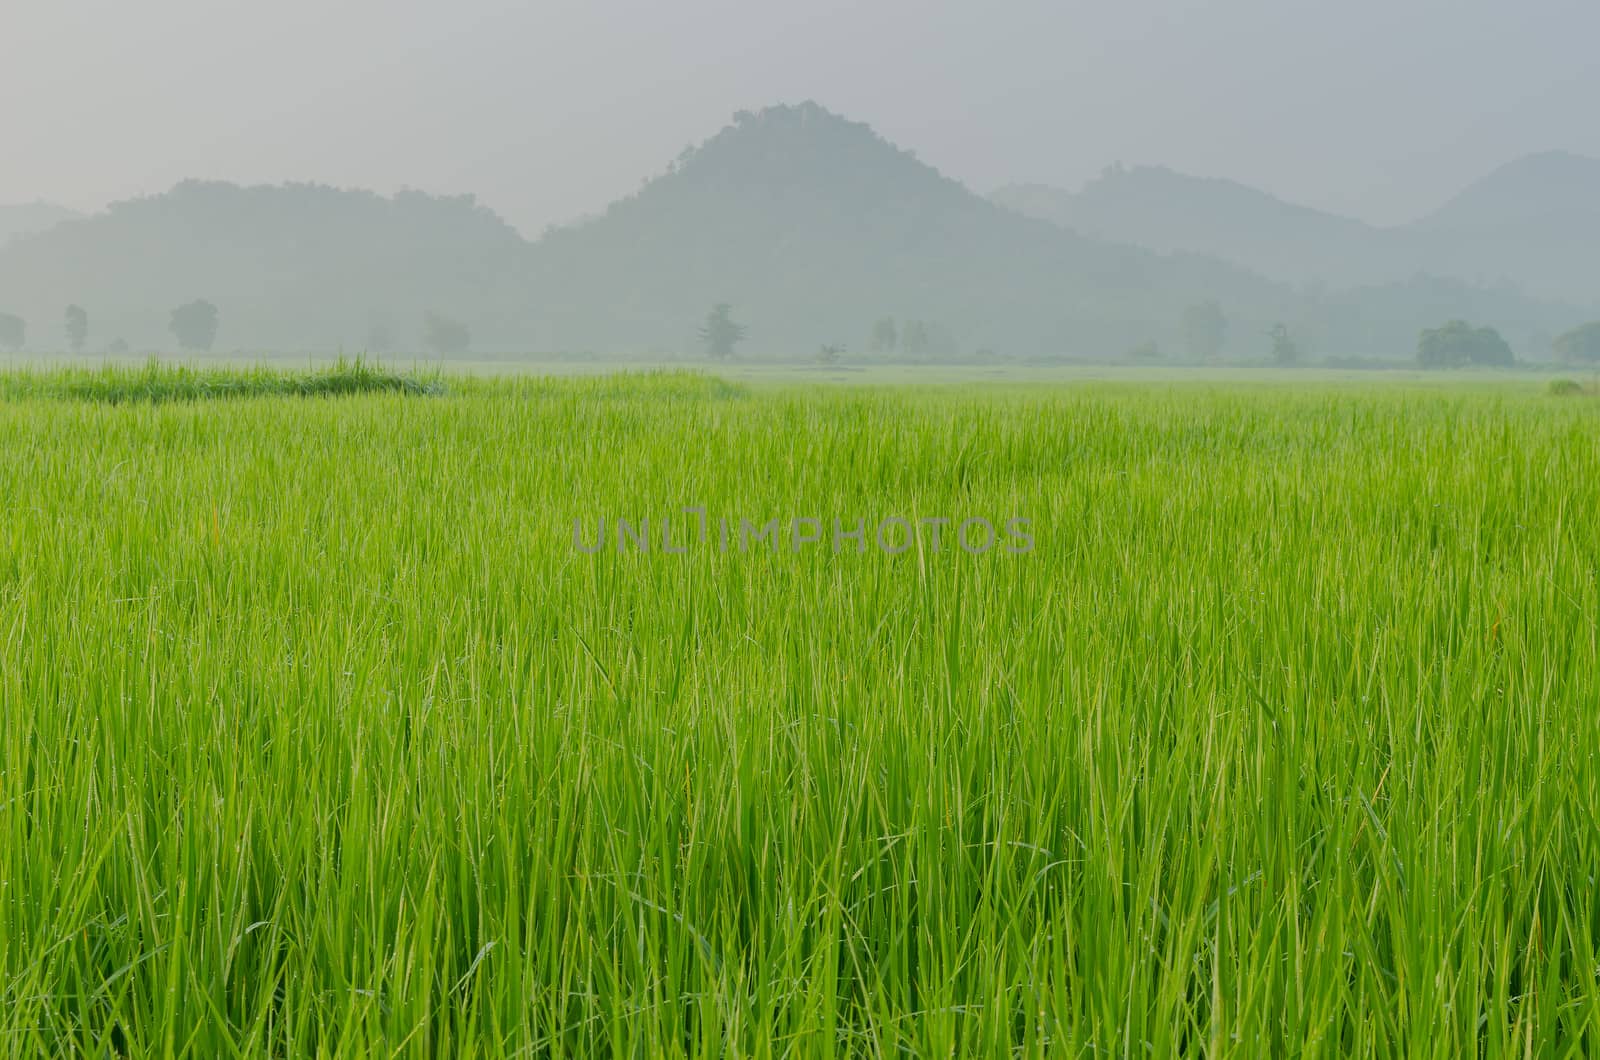 The scene of green rice field by tamnongthai